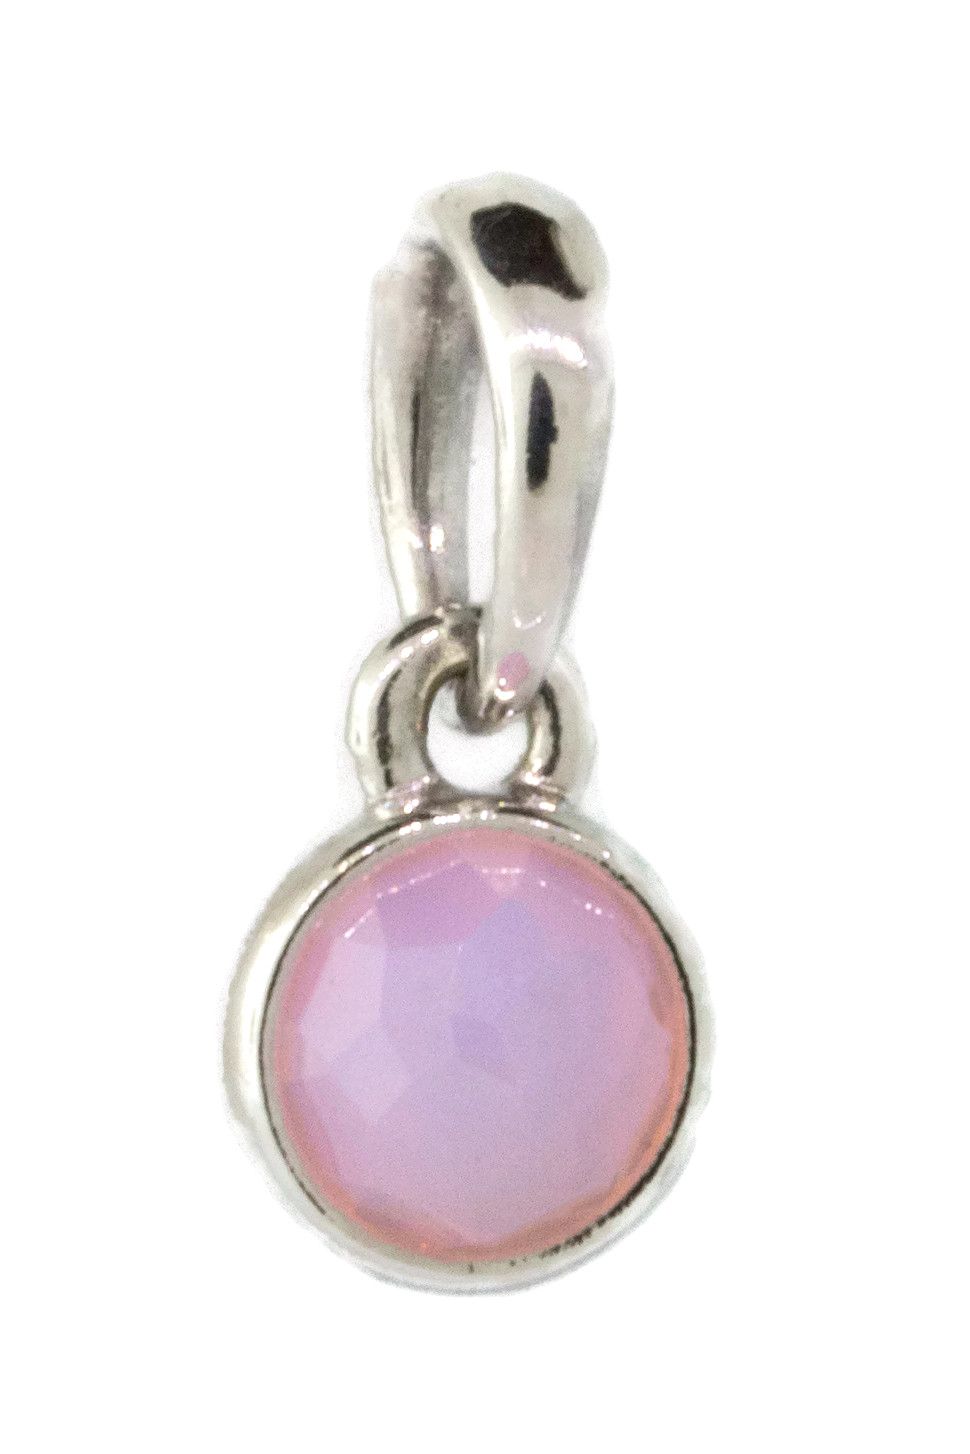 Authentic October Droplet Pendant, Opalescent Pink Crystal 390396nop Inside Recent Opalescent Pink Crystal October Droplet Pendant Necklaces (View 2 of 25)